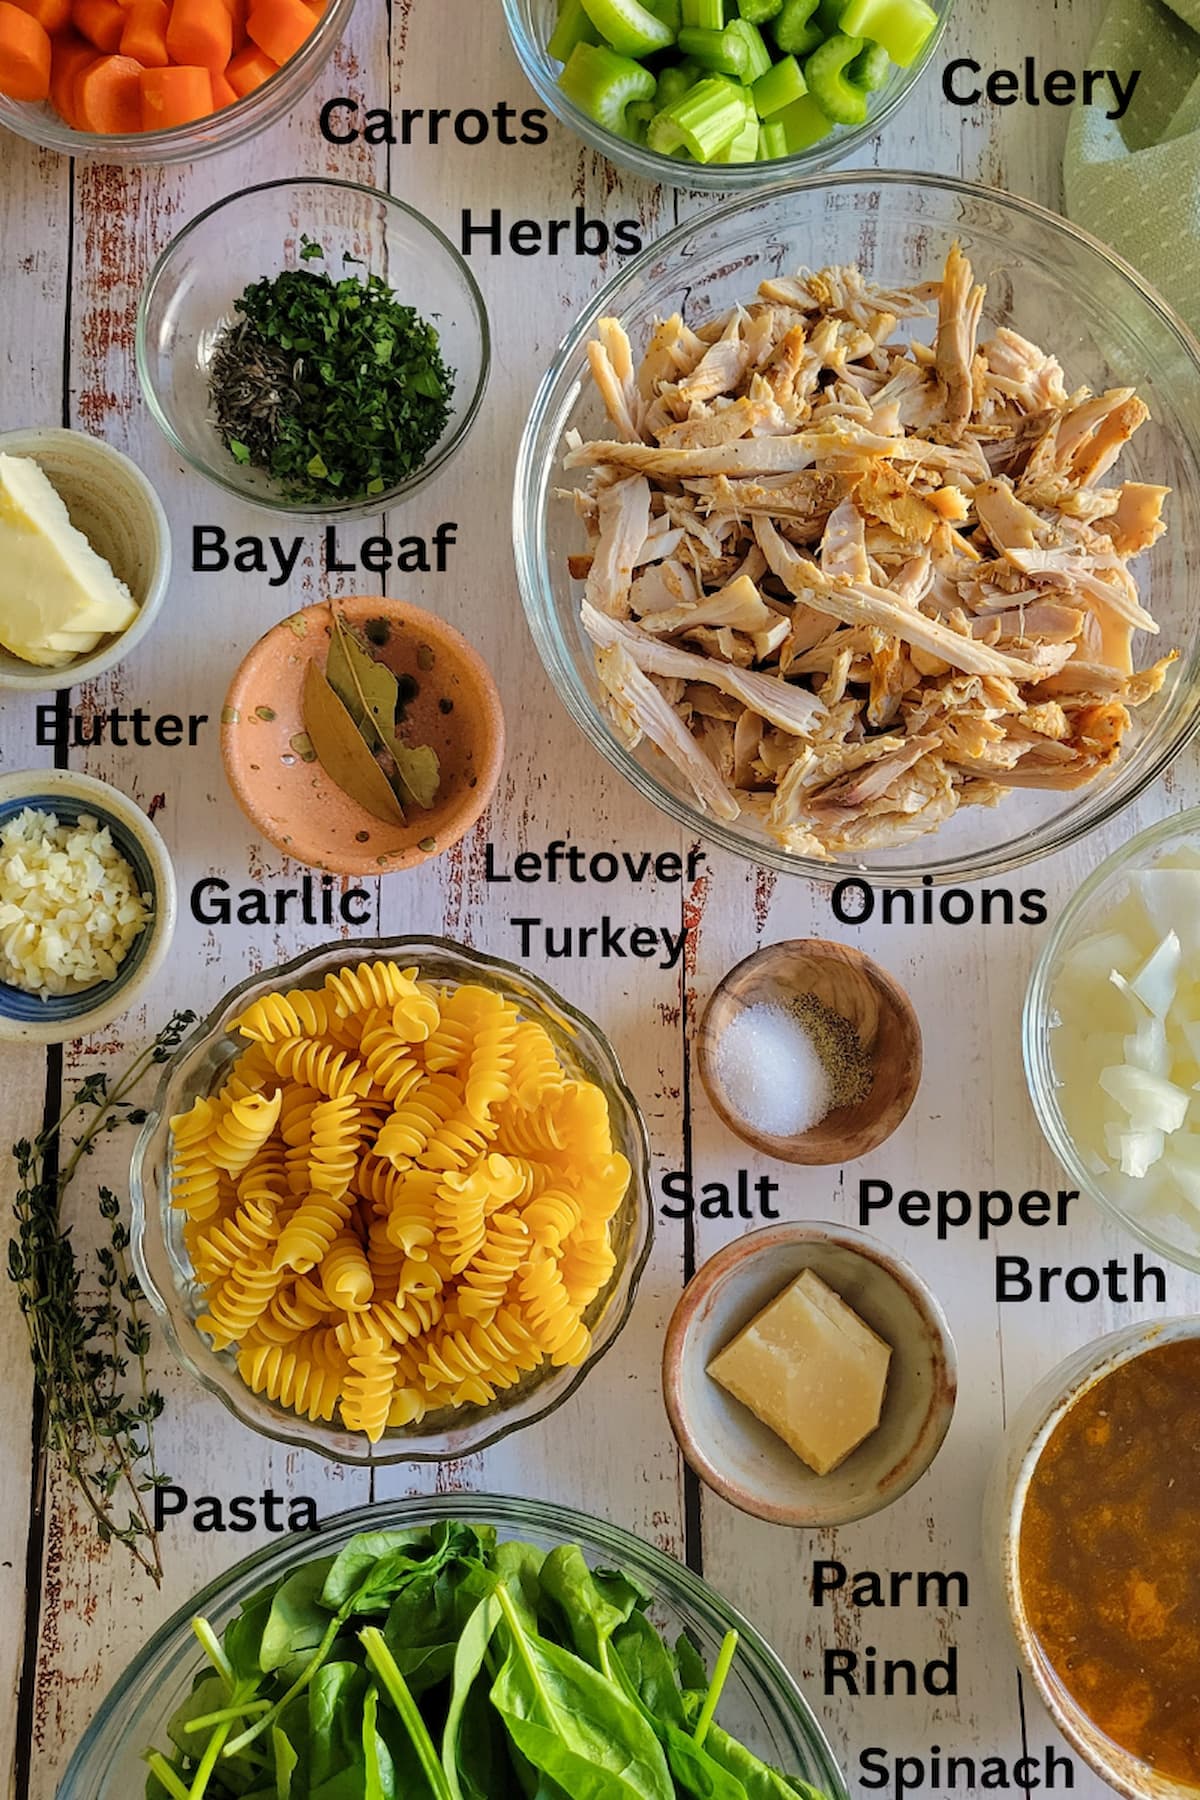 ingredients for leftover turkey turkey soup - leftover turkey, carrots, celery, onios, garlic, herbs, spinach, parm rind, broth, salt, pepper, pasta, butter, bay leaf